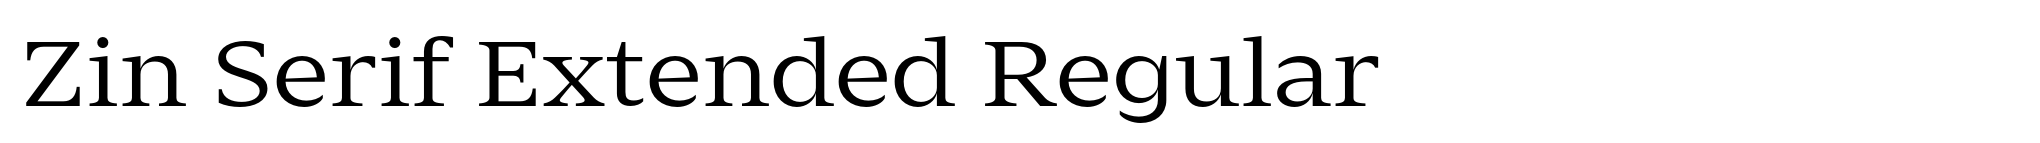 Zin Serif Extended Regular image